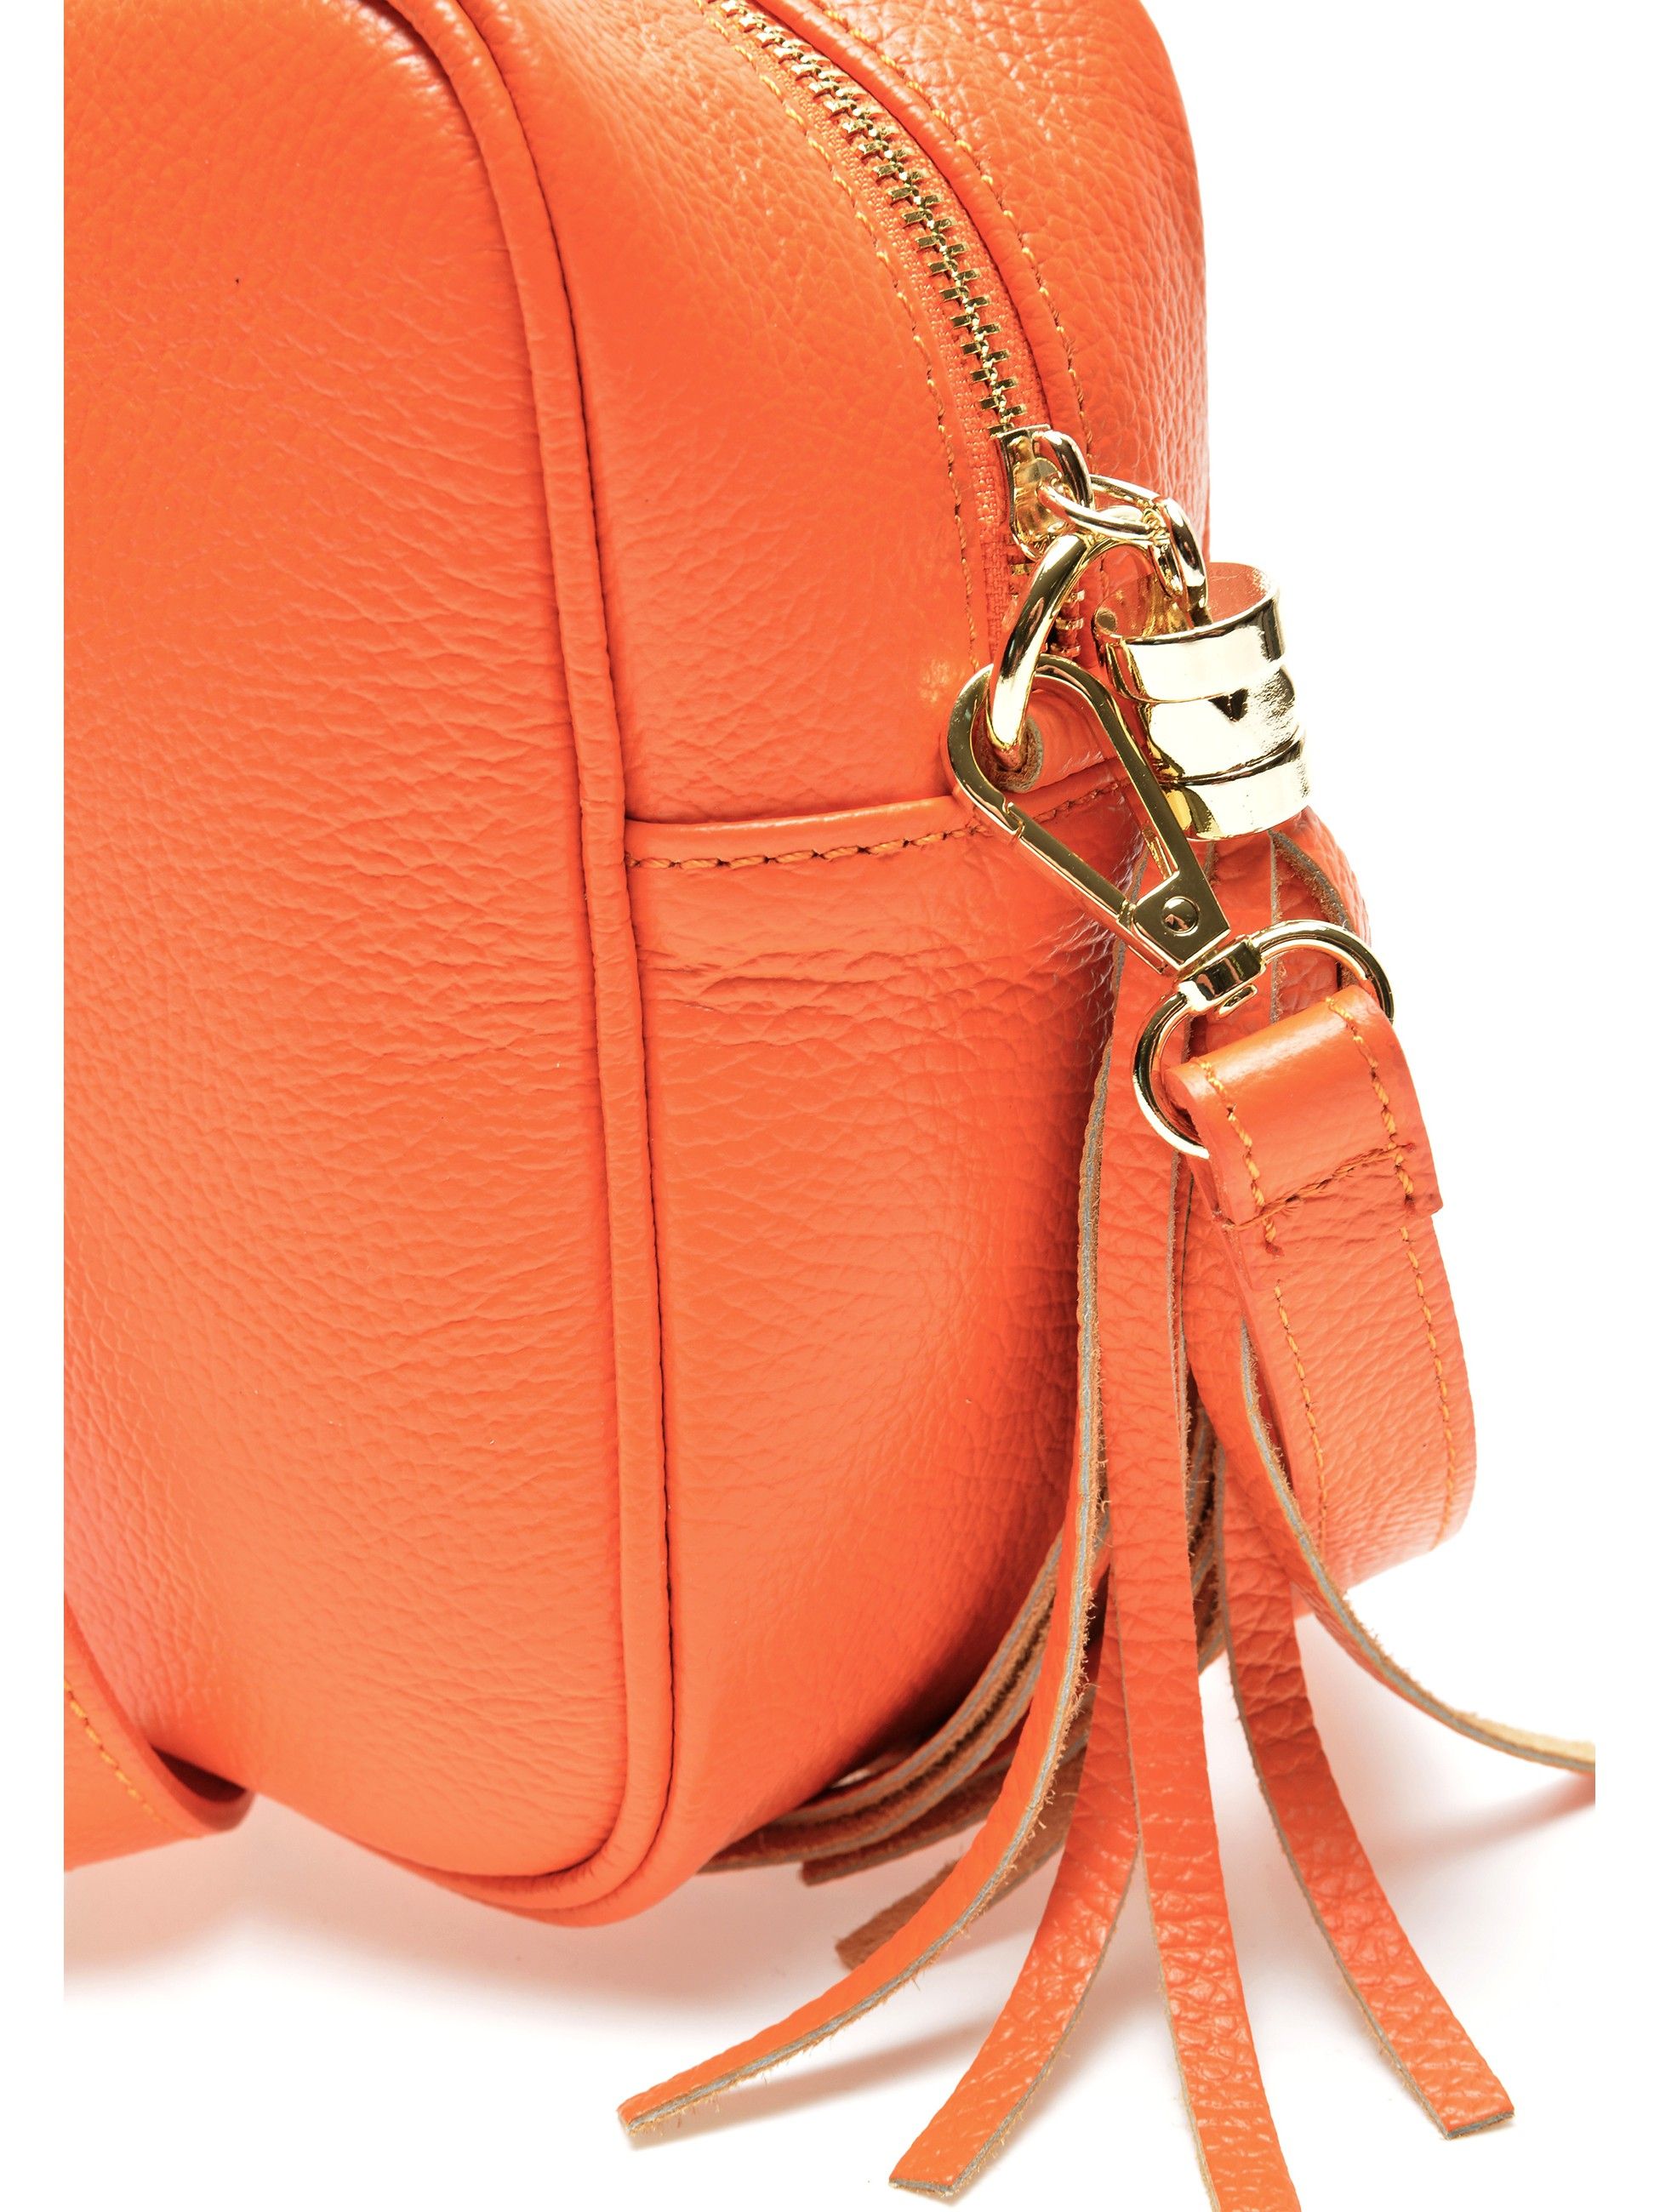 Shoulder Bag
100% cow leather
Top zip closure
Tassel detail
Dimensions (L): 20x27.5x9 cm
Handle: /
Shoulder strap: 120 cm adjustable